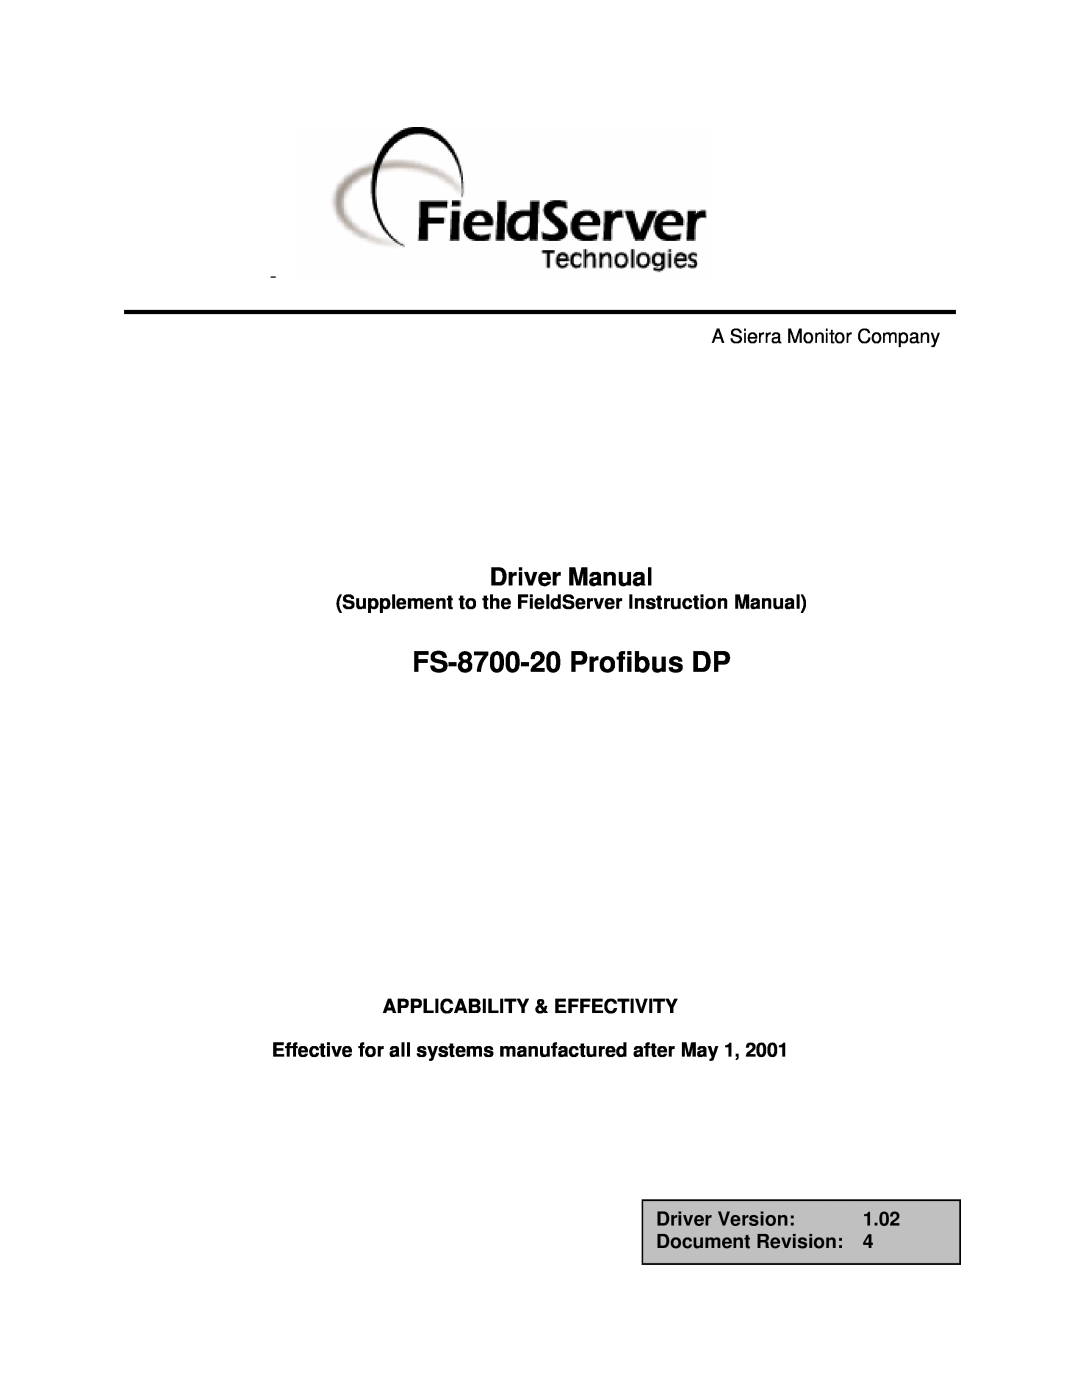 FieldServer instruction manual FS-8700-20 Profibus DP, Driver Manual 